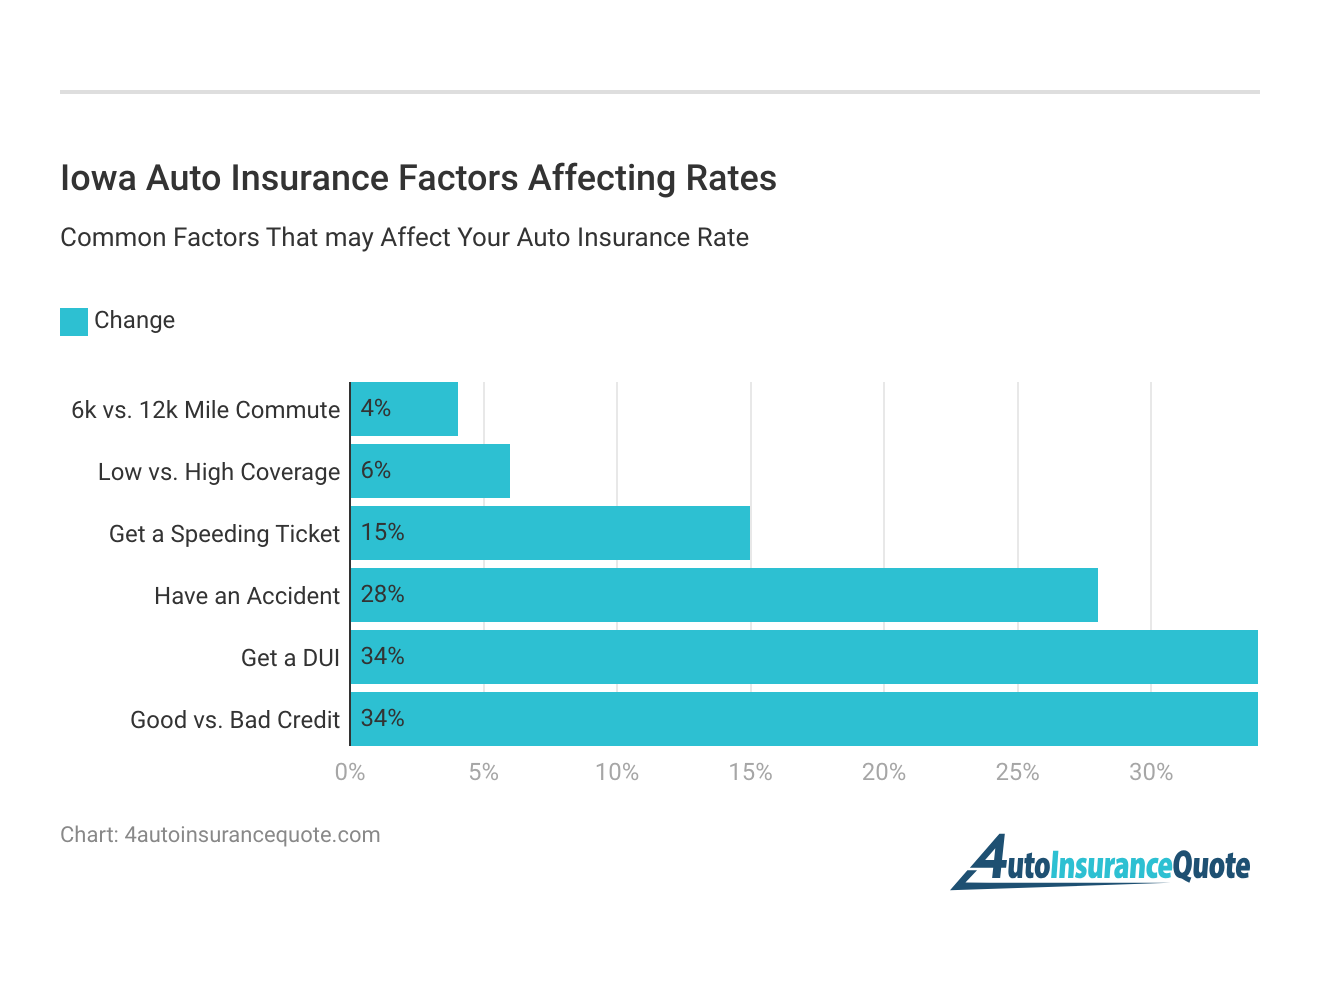 <h3>Iowa Auto Insurance Factors Affecting Rates</h3>